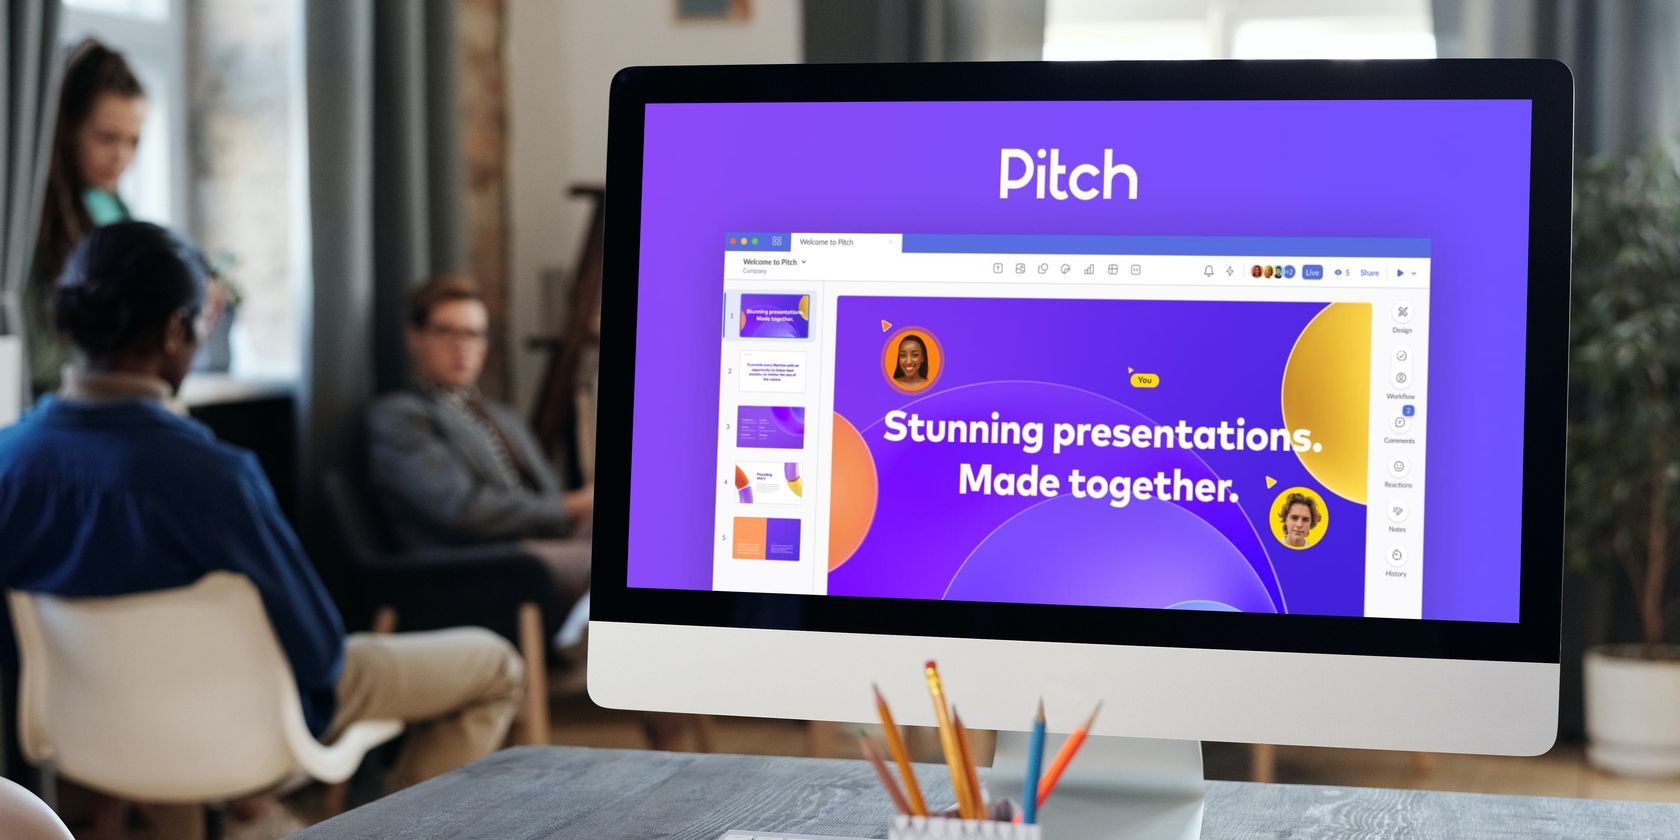 Pitch collaborative presentation software